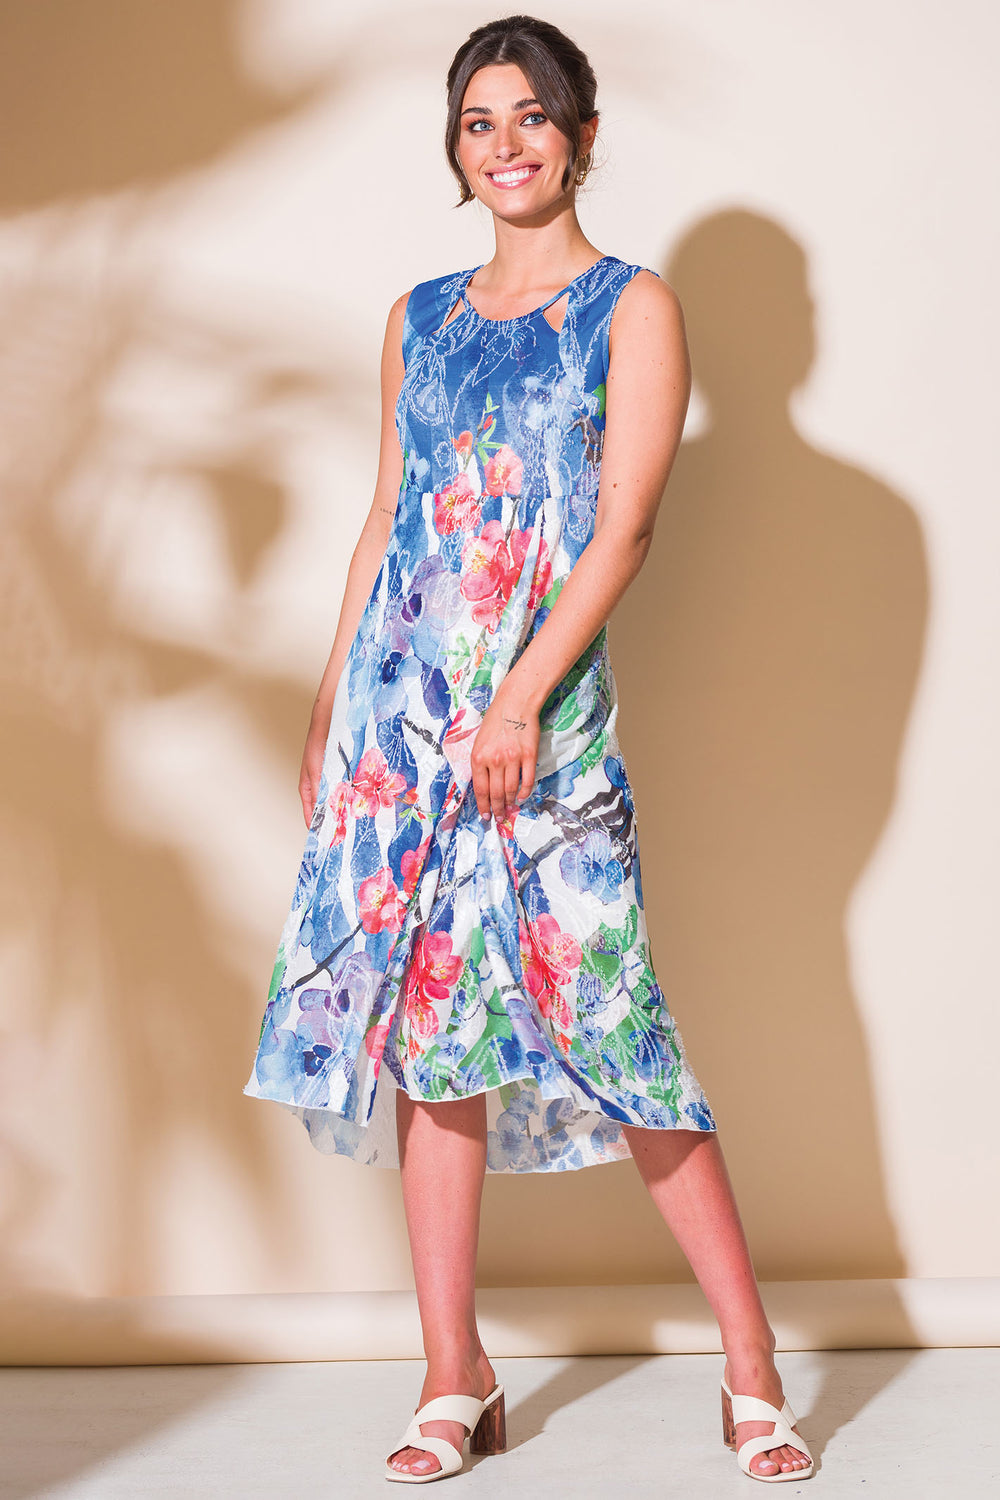 Alison Sheri A43408 Blue Floral Print Sleeveless Dress - Rouge Boutique Inverness